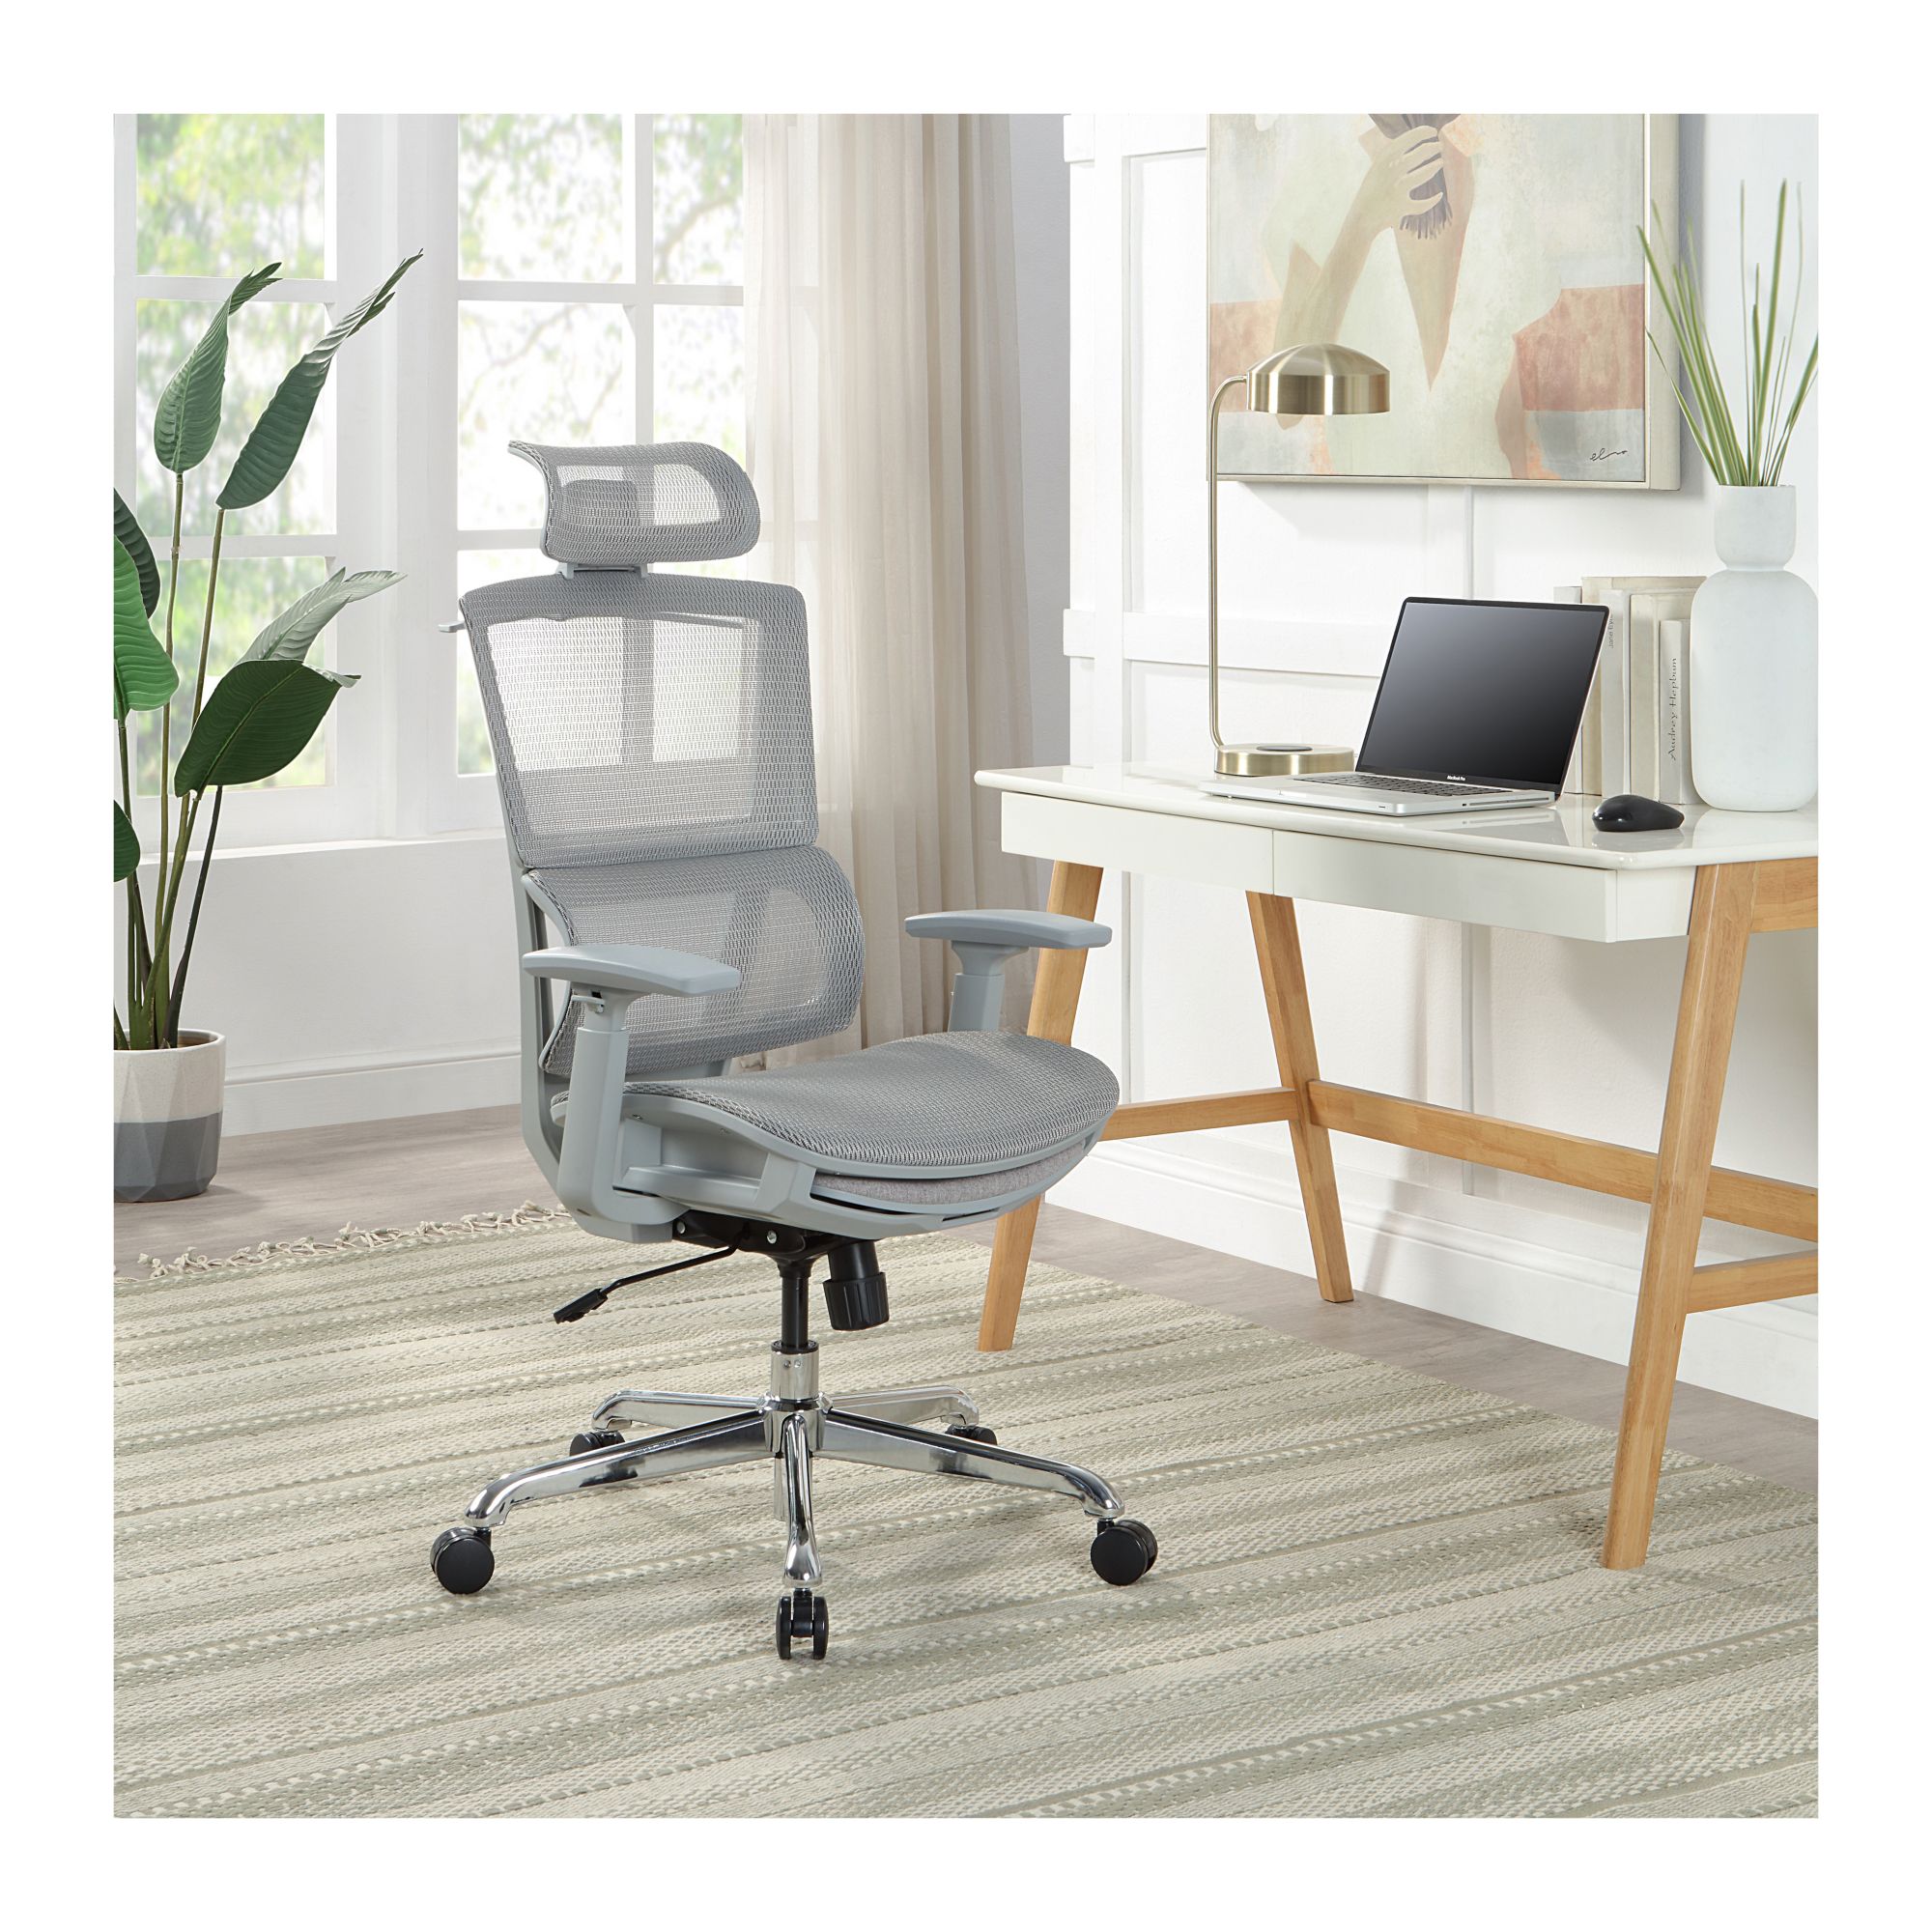 Berkley Jensen Ergonomic Mesh Office Chair With Headrest and Footrest - Gray